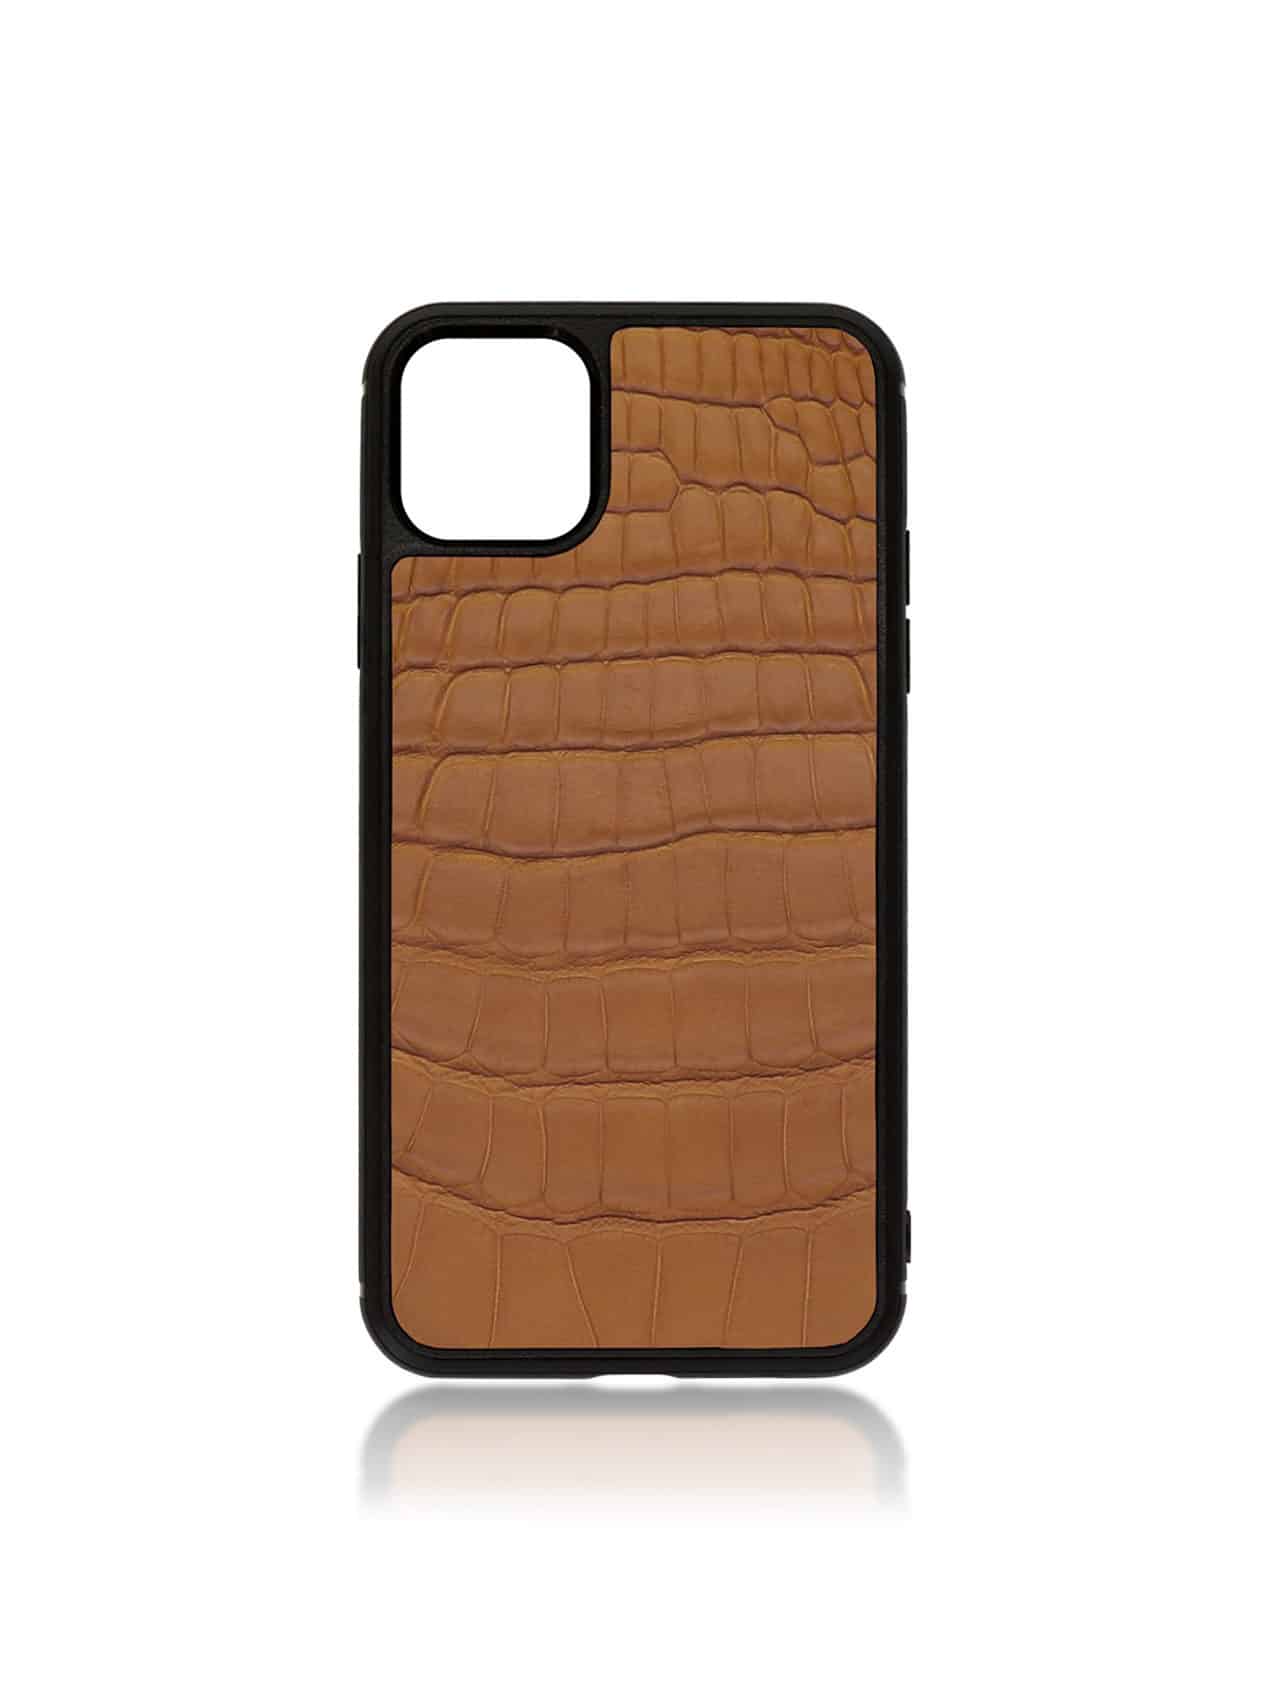 iphone case apple jean rousseau crocodile brown